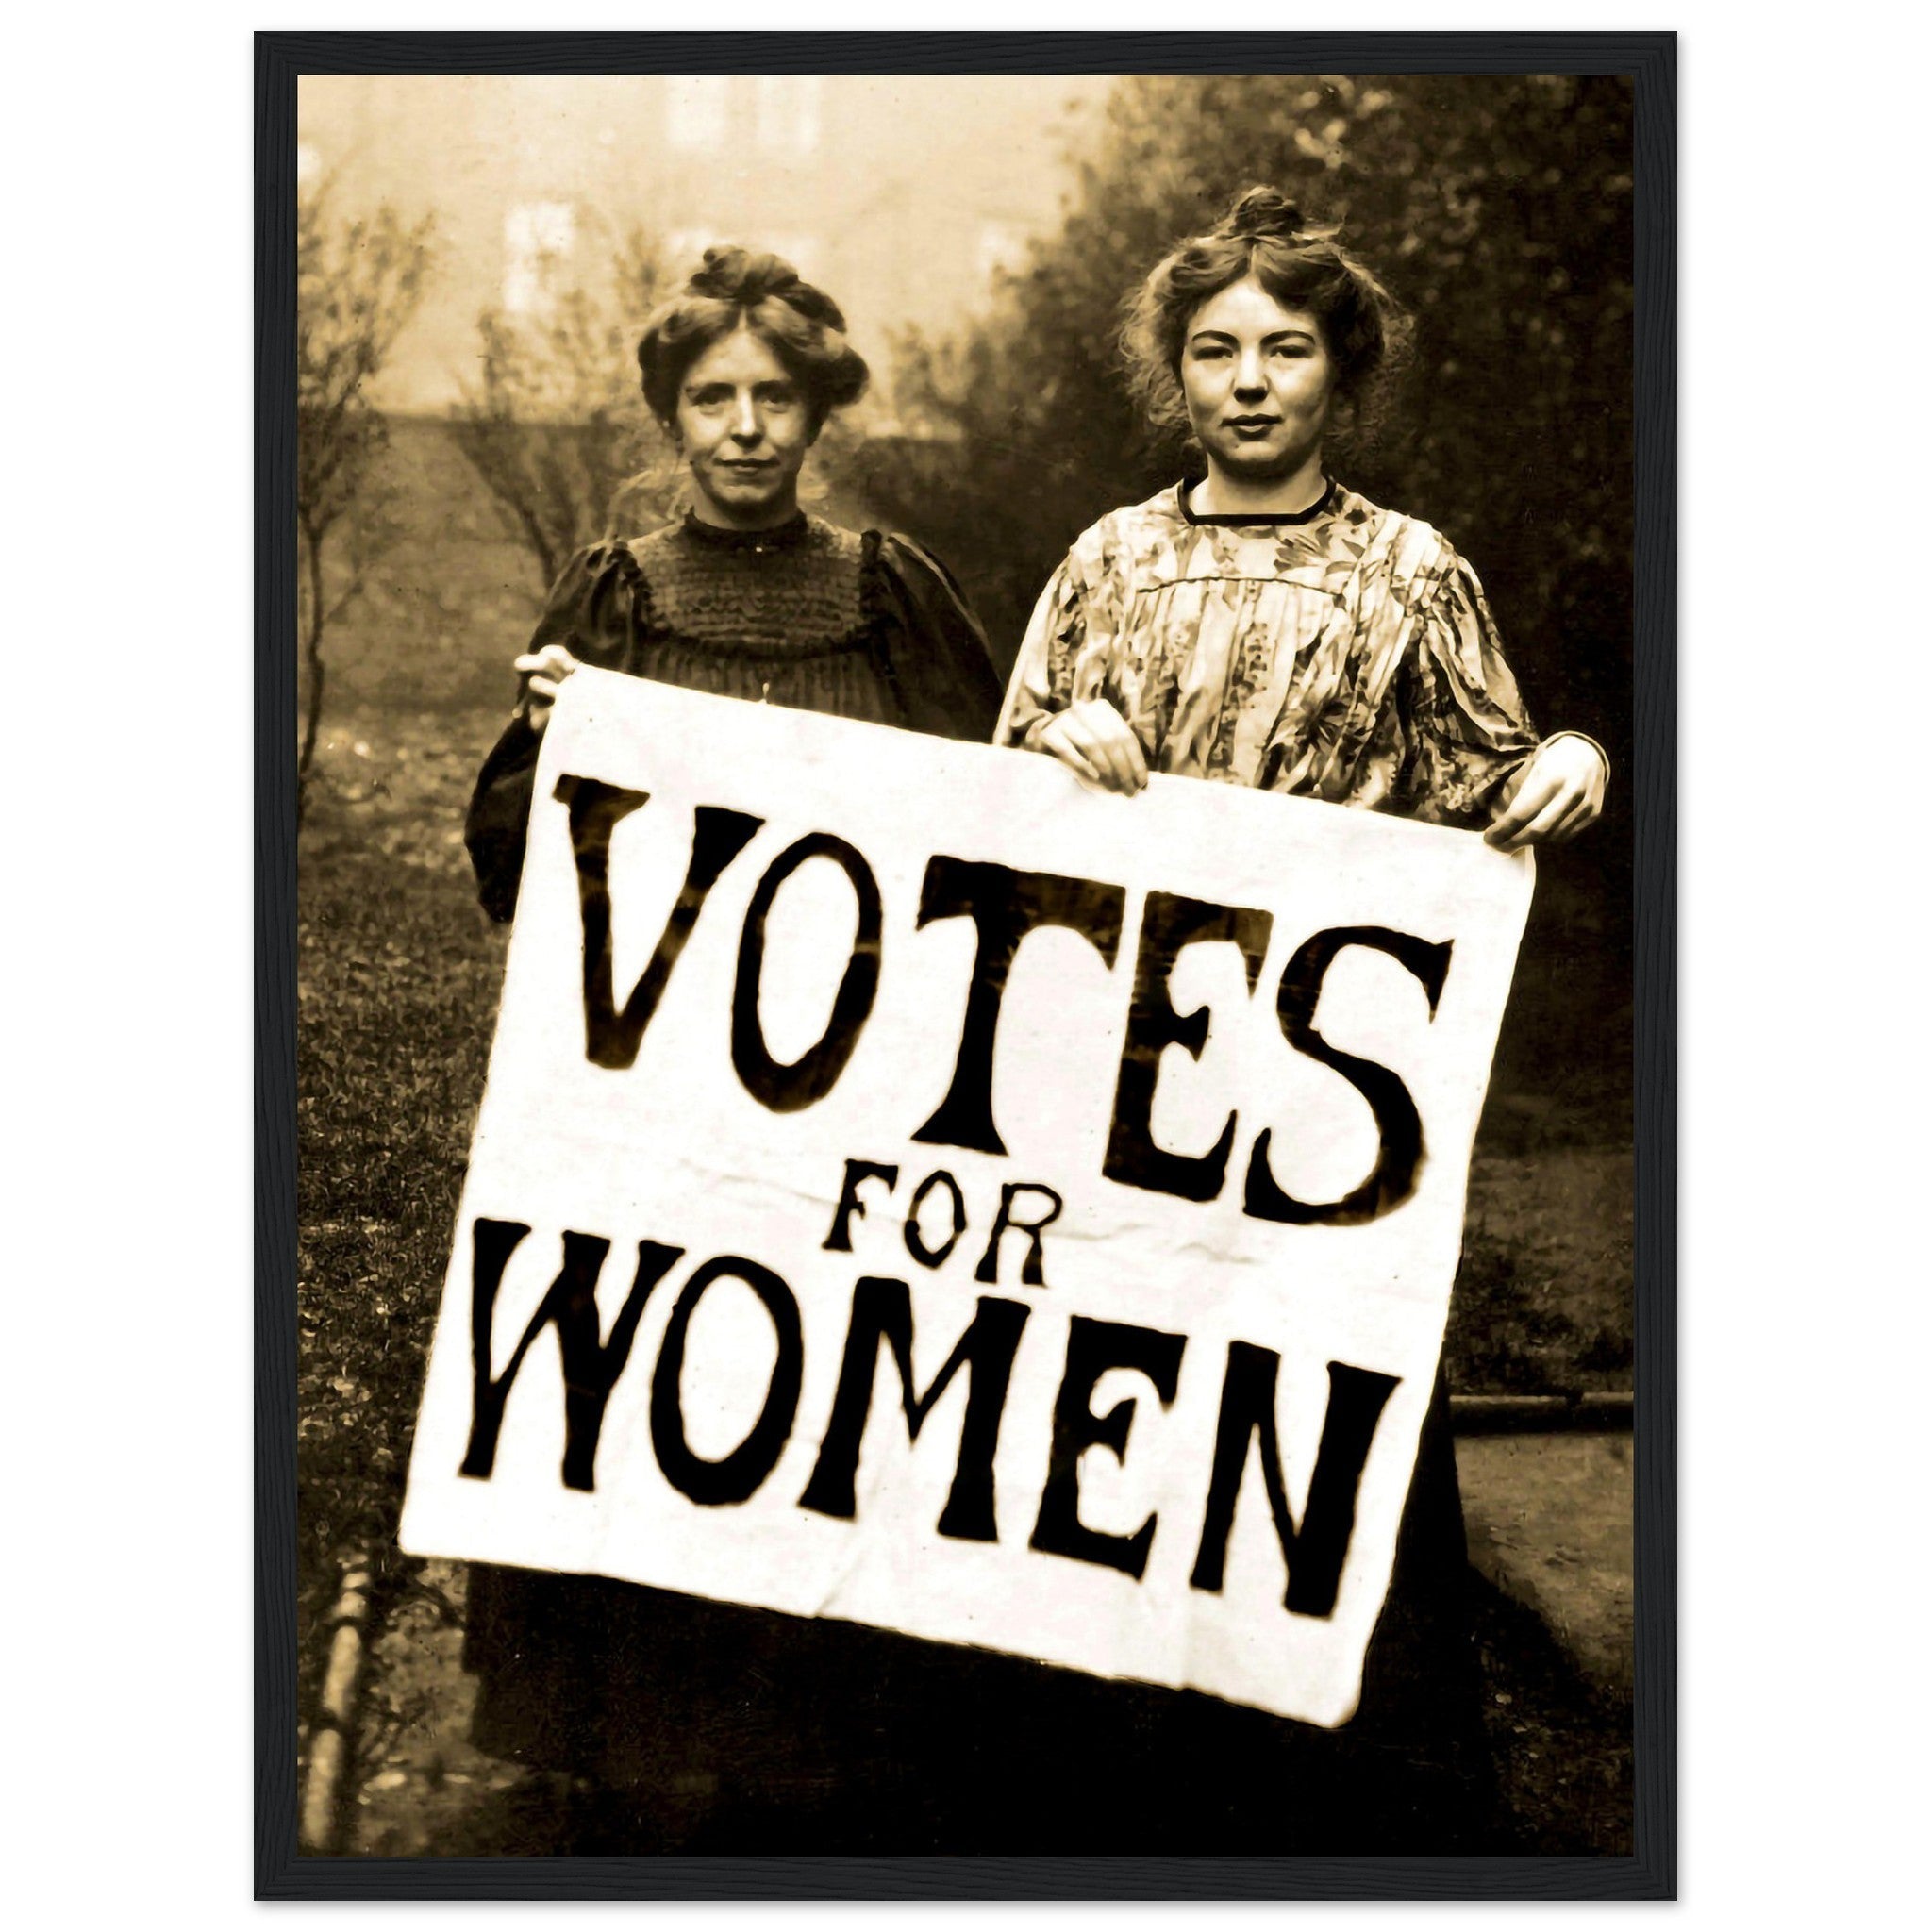 Suffragettes Framed Print, Votes For Women Print, Vintage Photo Christabel Pankhurst, Annie Kenney - WallArtPrints4U